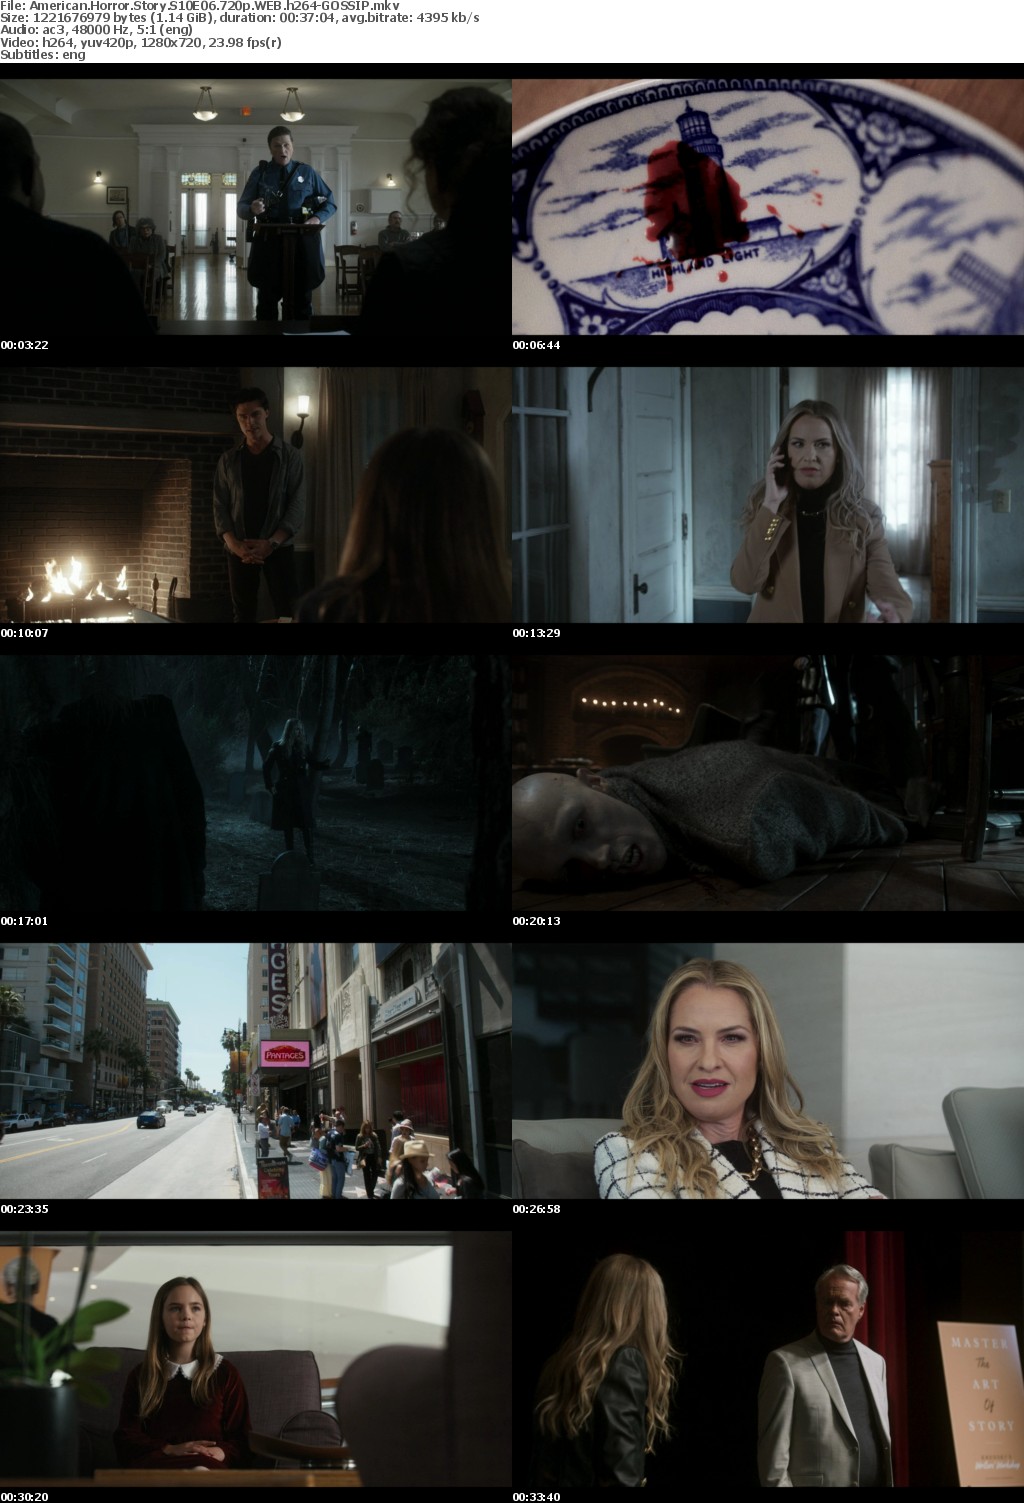 American Horror Story S10E06 720p WEB h264-GOSSIP